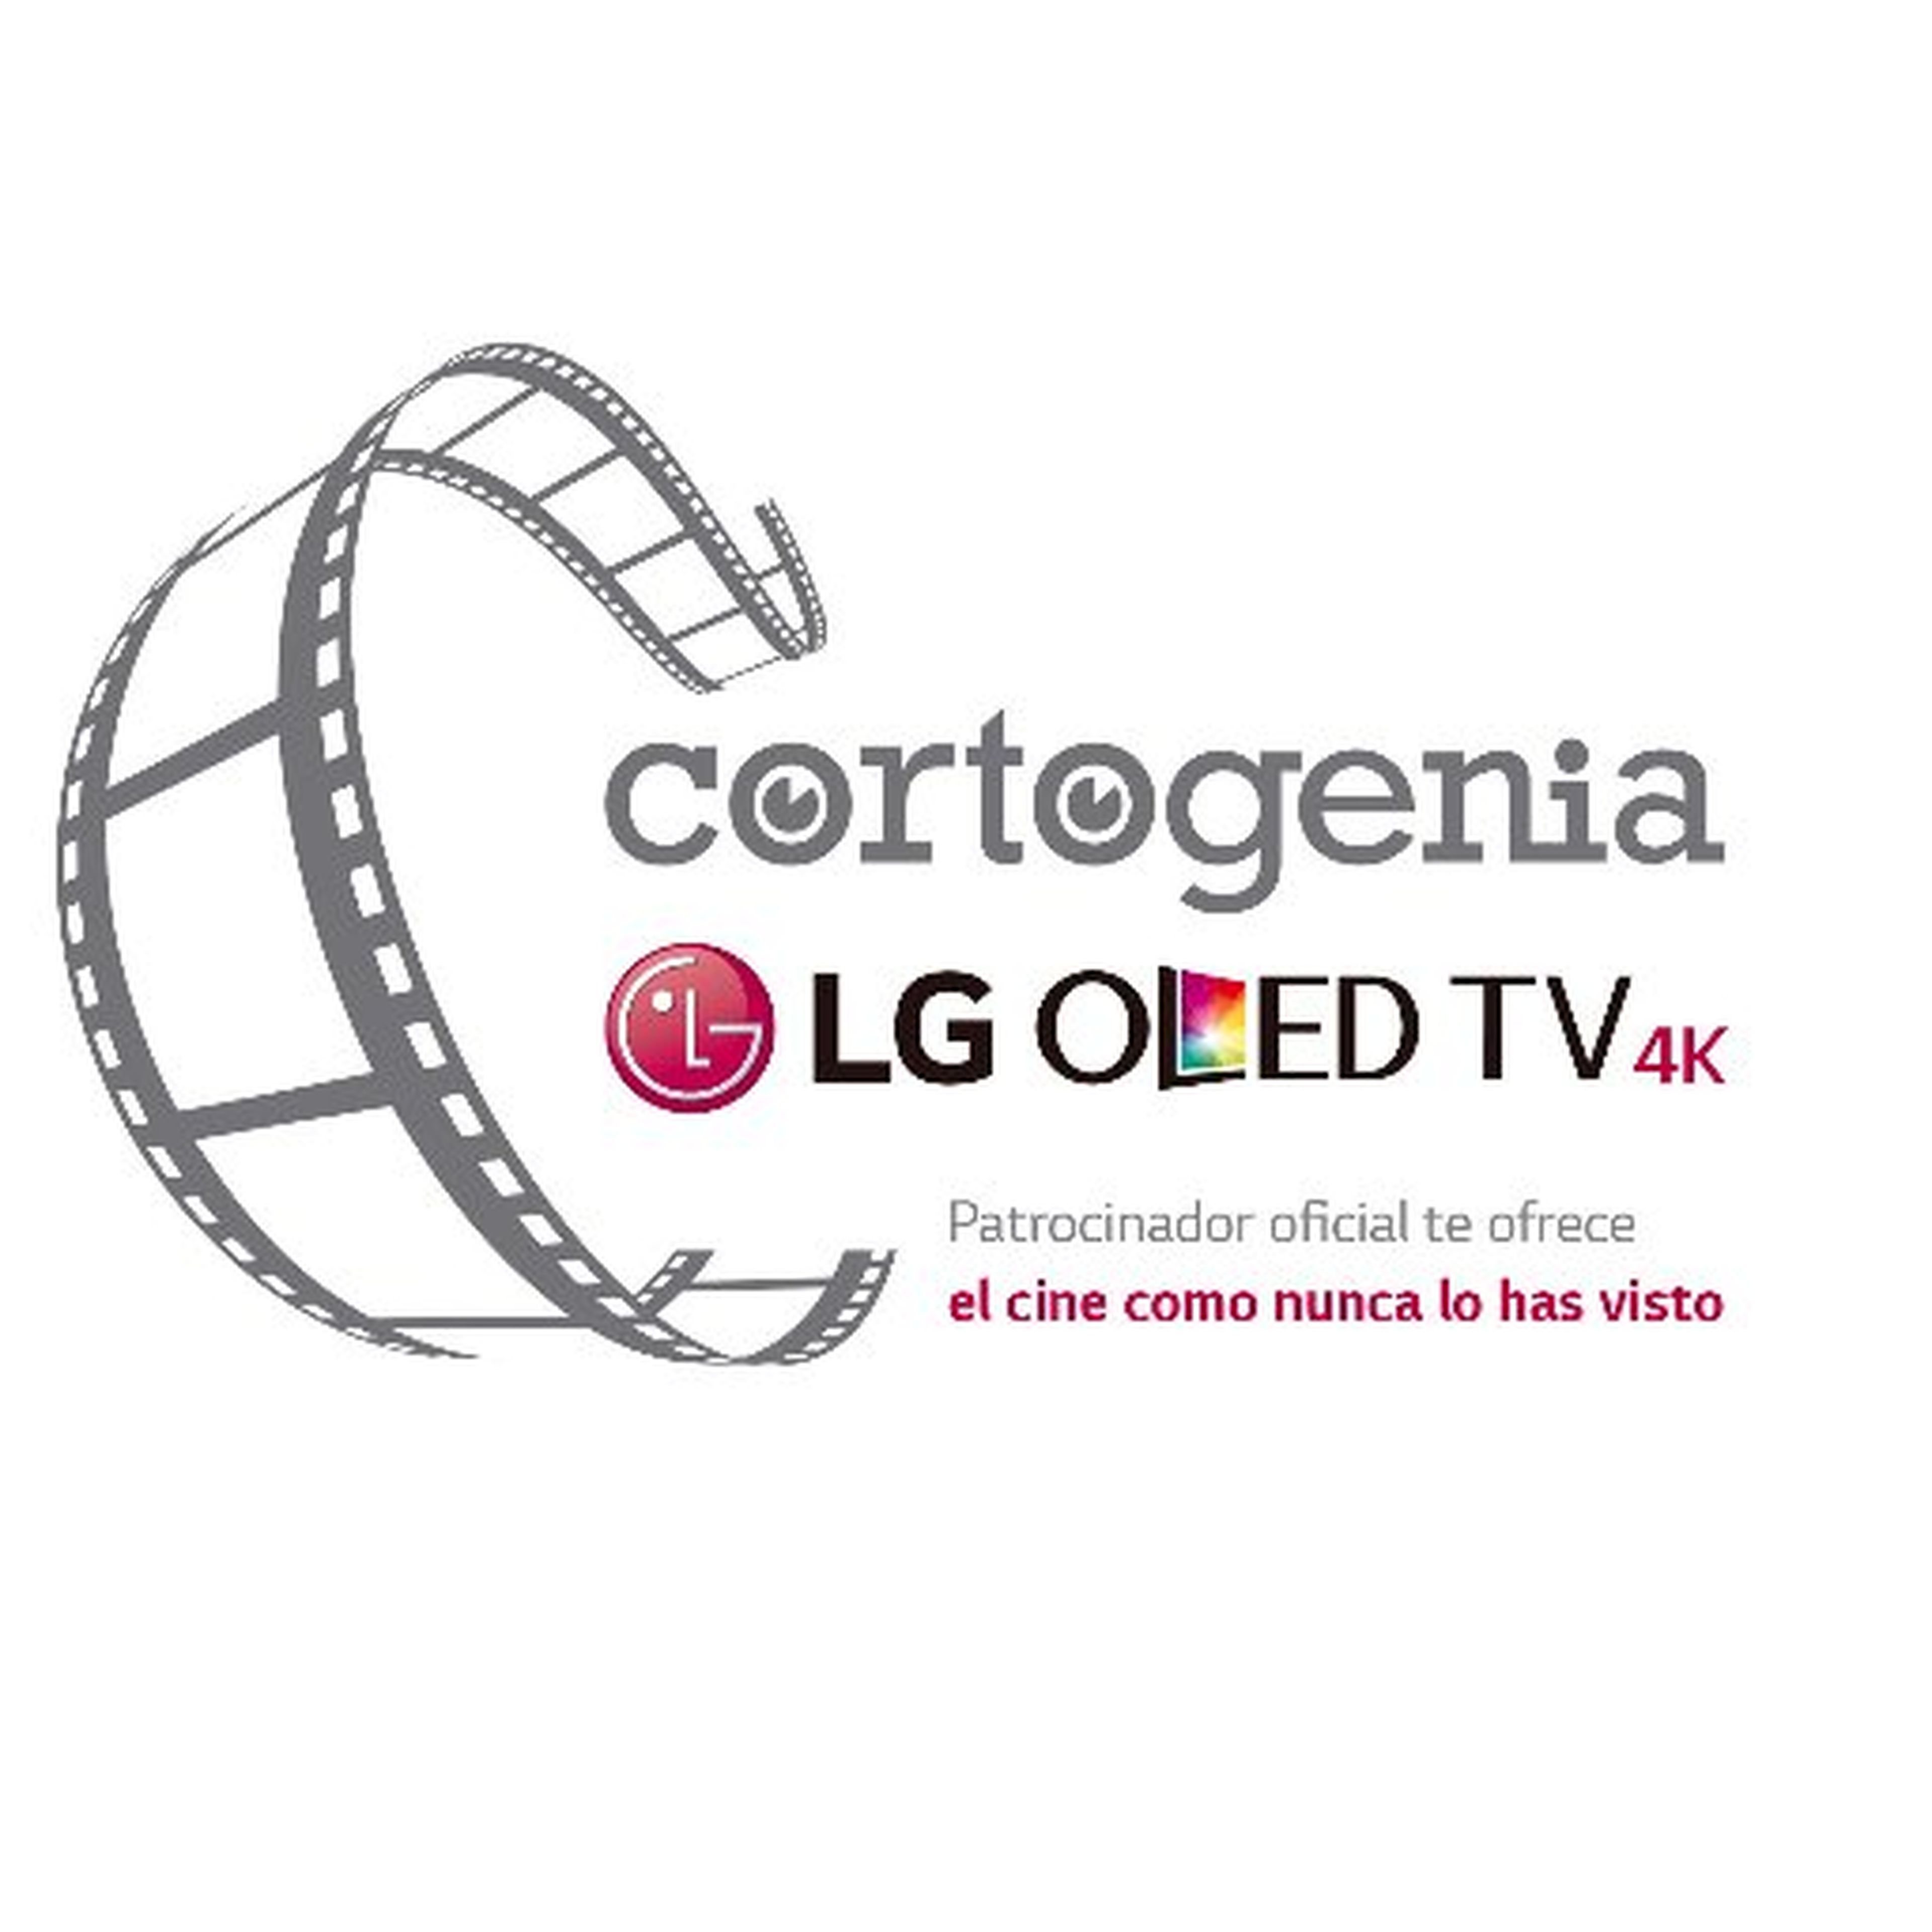 Cortogenia y LG OLED TV